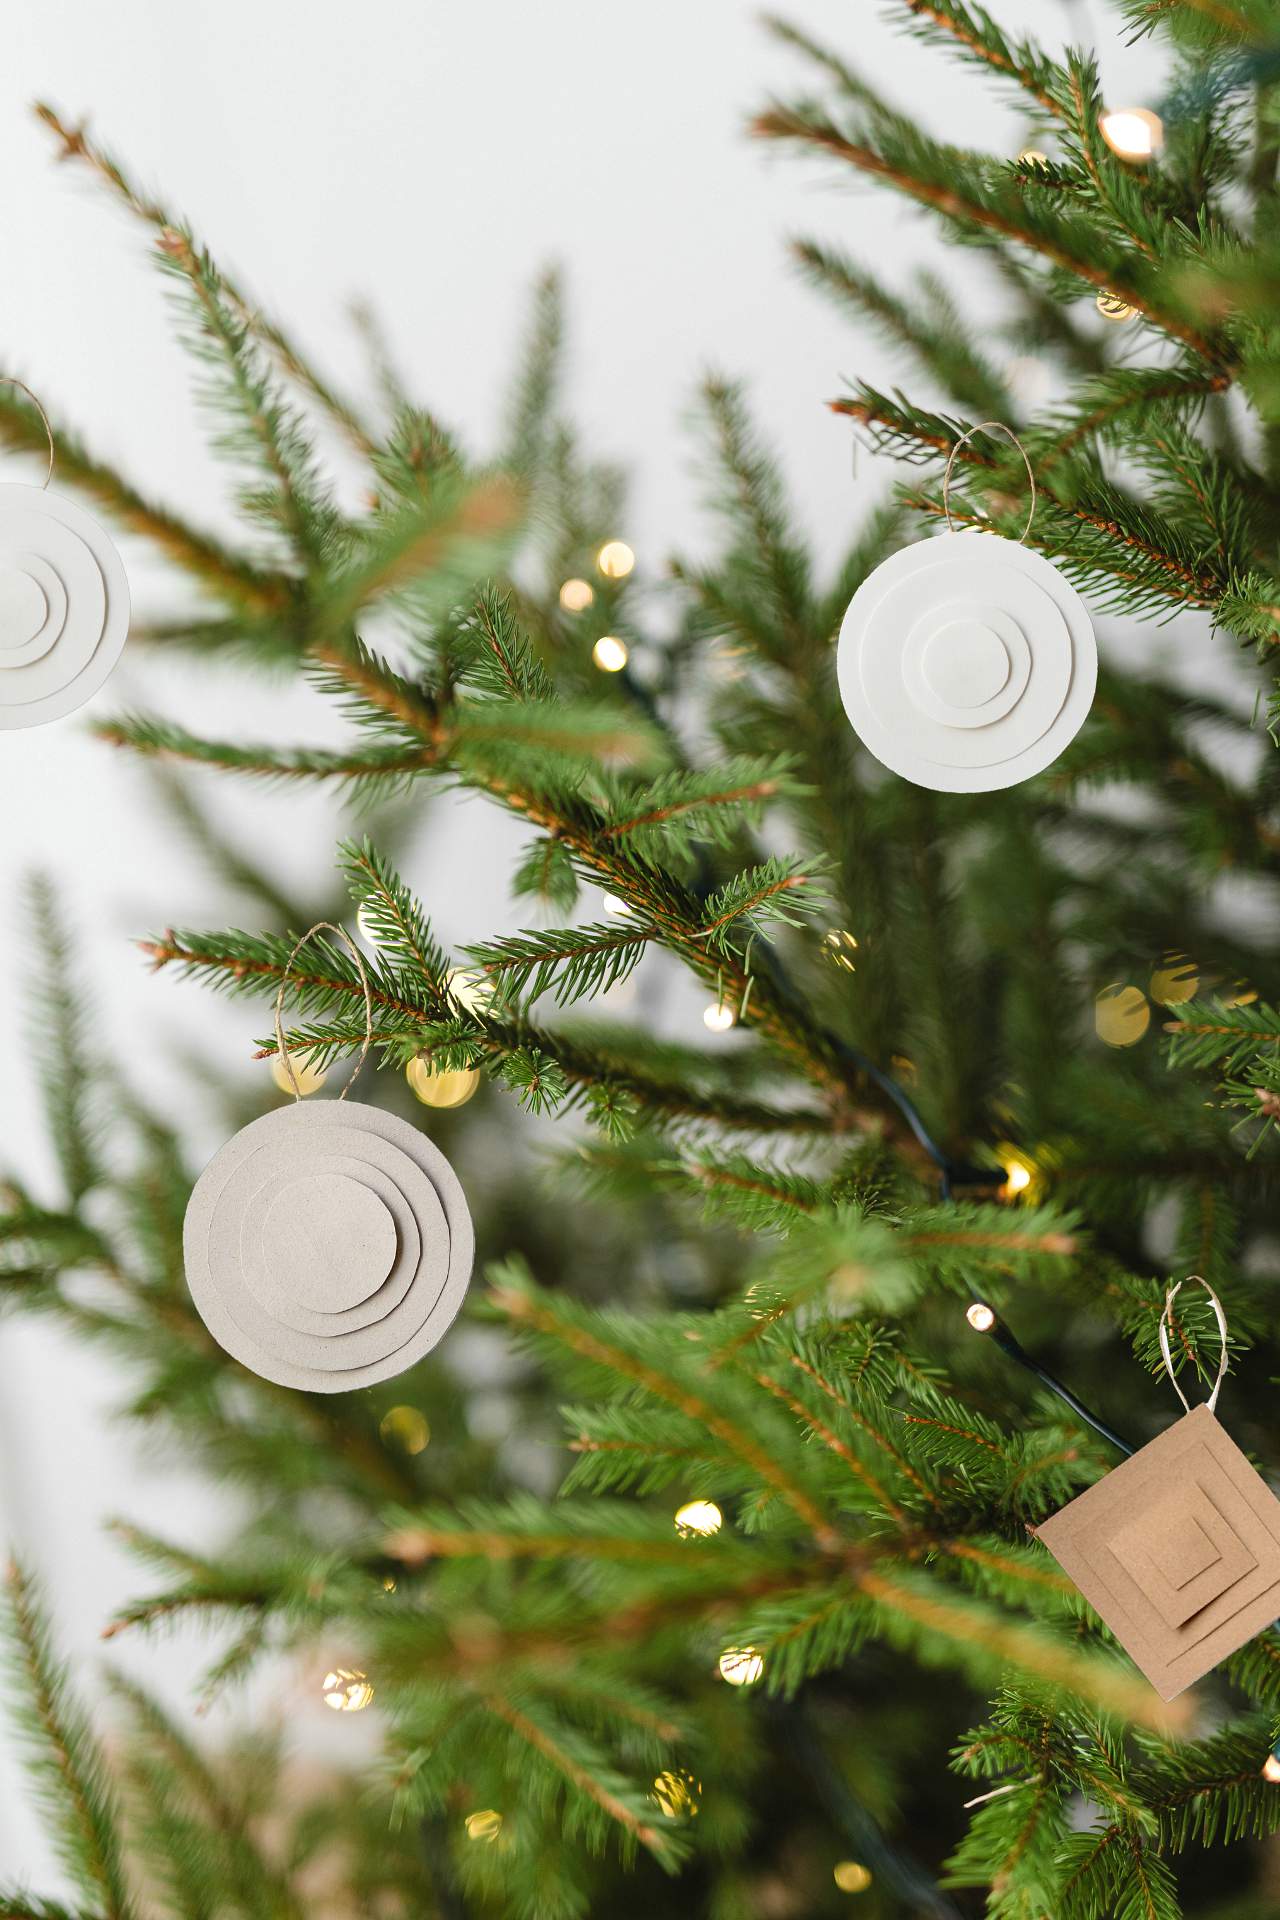 DIY paper Christmas ornaments